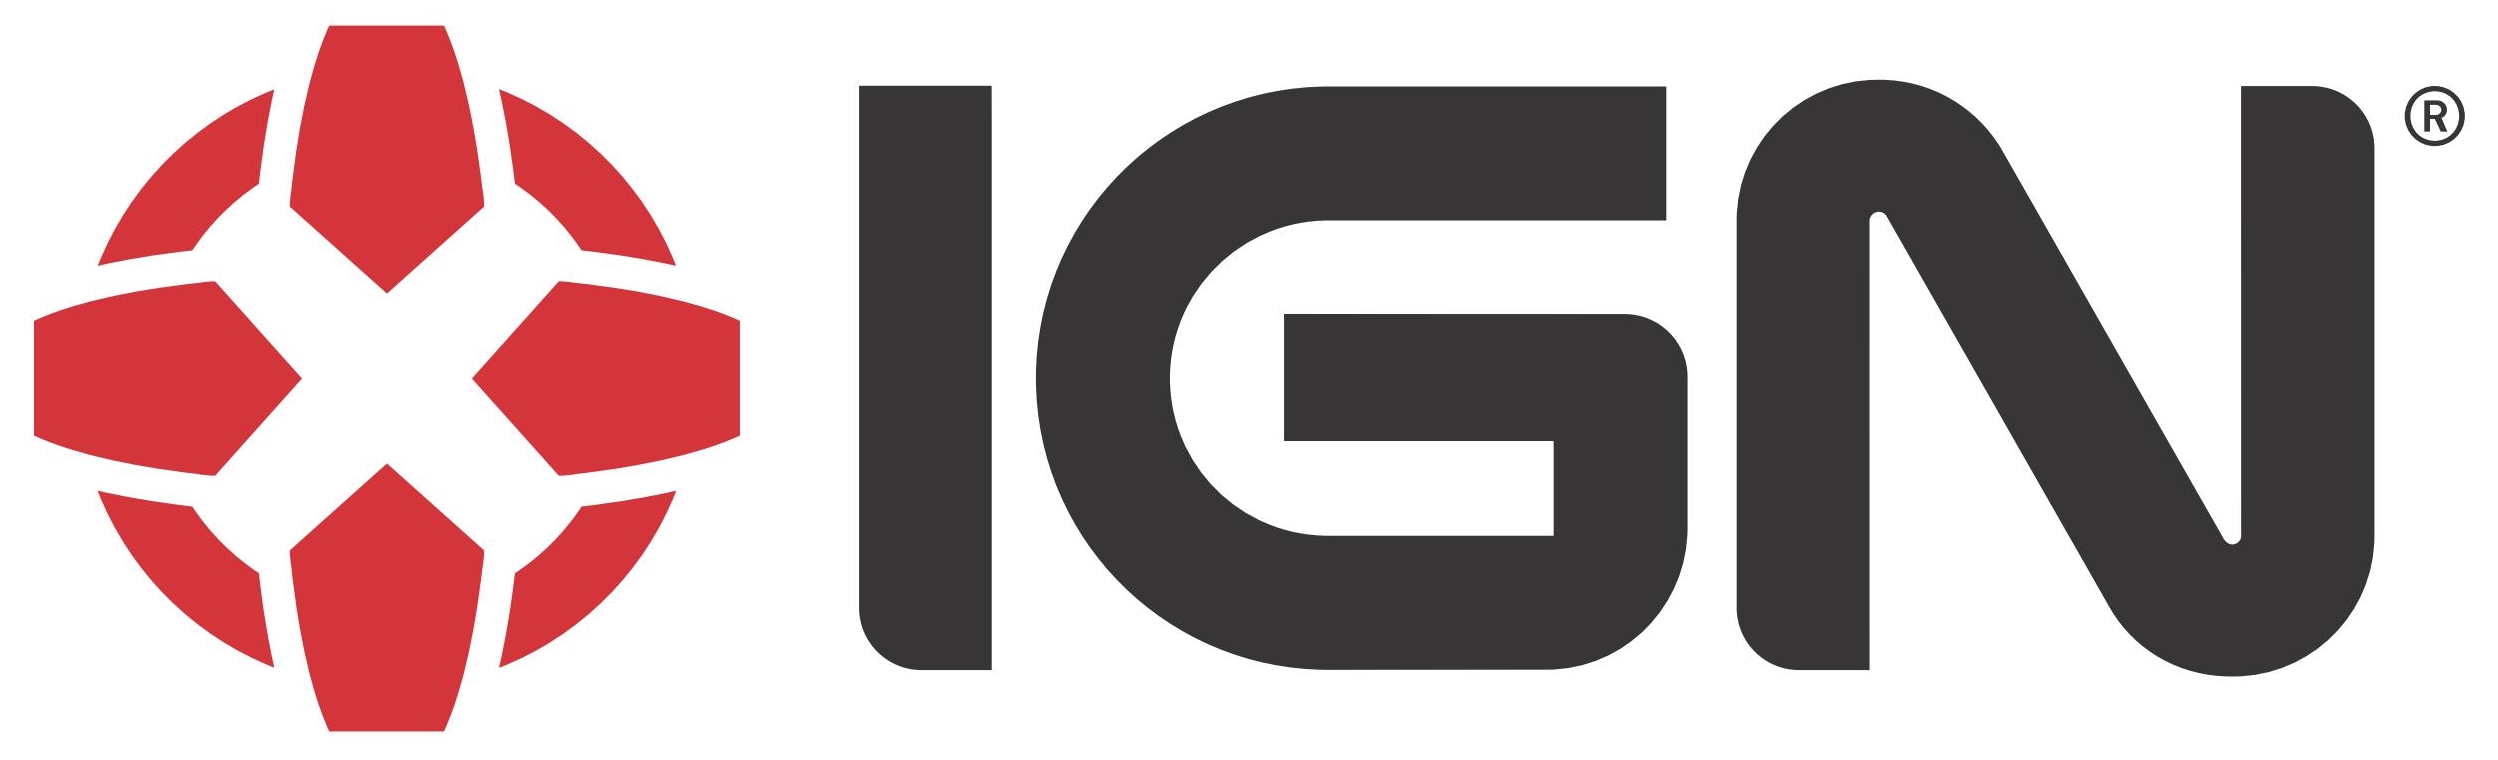 EVGA - Products - EVGA GeForce GTX 1080 Ti SC2 GAMING, 11G-P4-6593-KR, 11GB  GDDR5X, iCX Technology - 9 Thermal Sensors & RGB LED G/P/M - 11G-P4-6593-KR